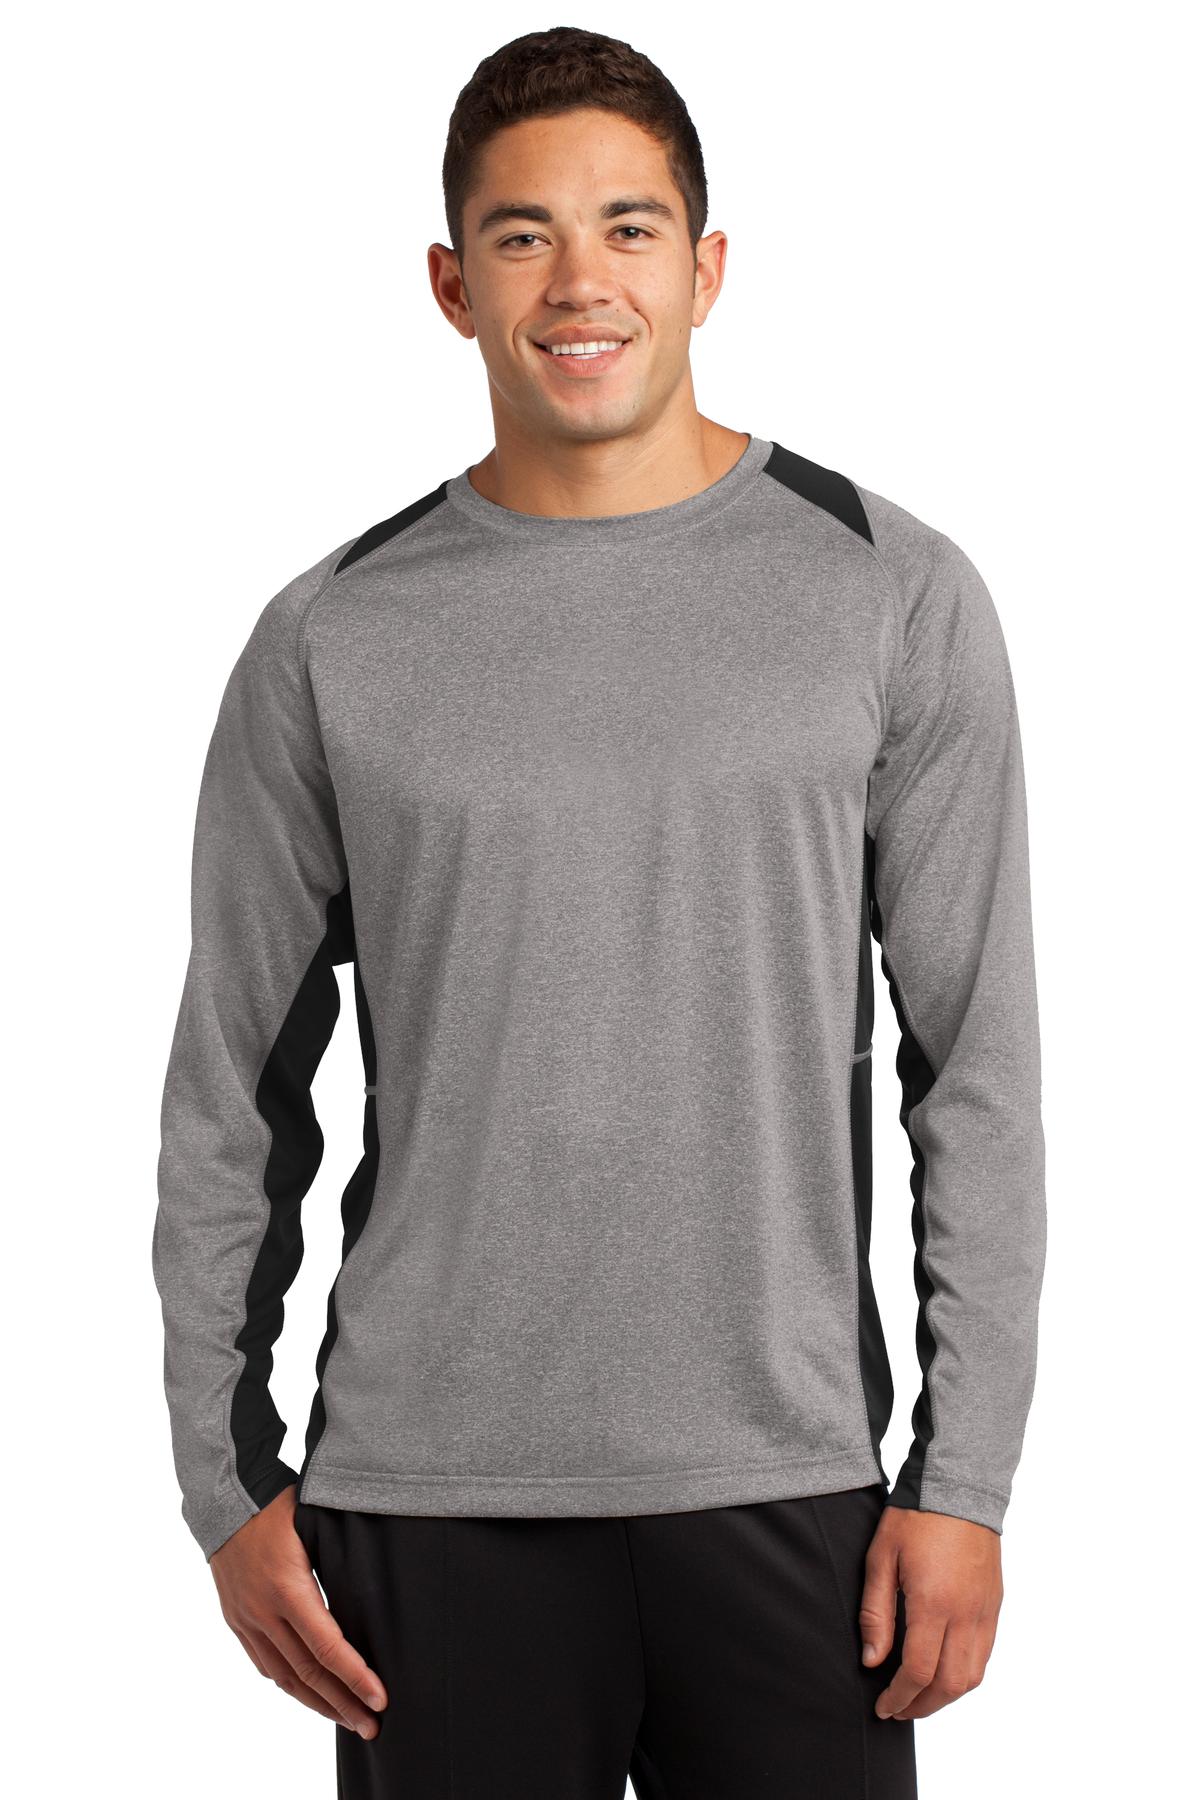 Sport-Tek Activewear T-Shirts for Hospitality ® Long Sleeve Heather Colorblock Contender Tee.-Sport-Tek